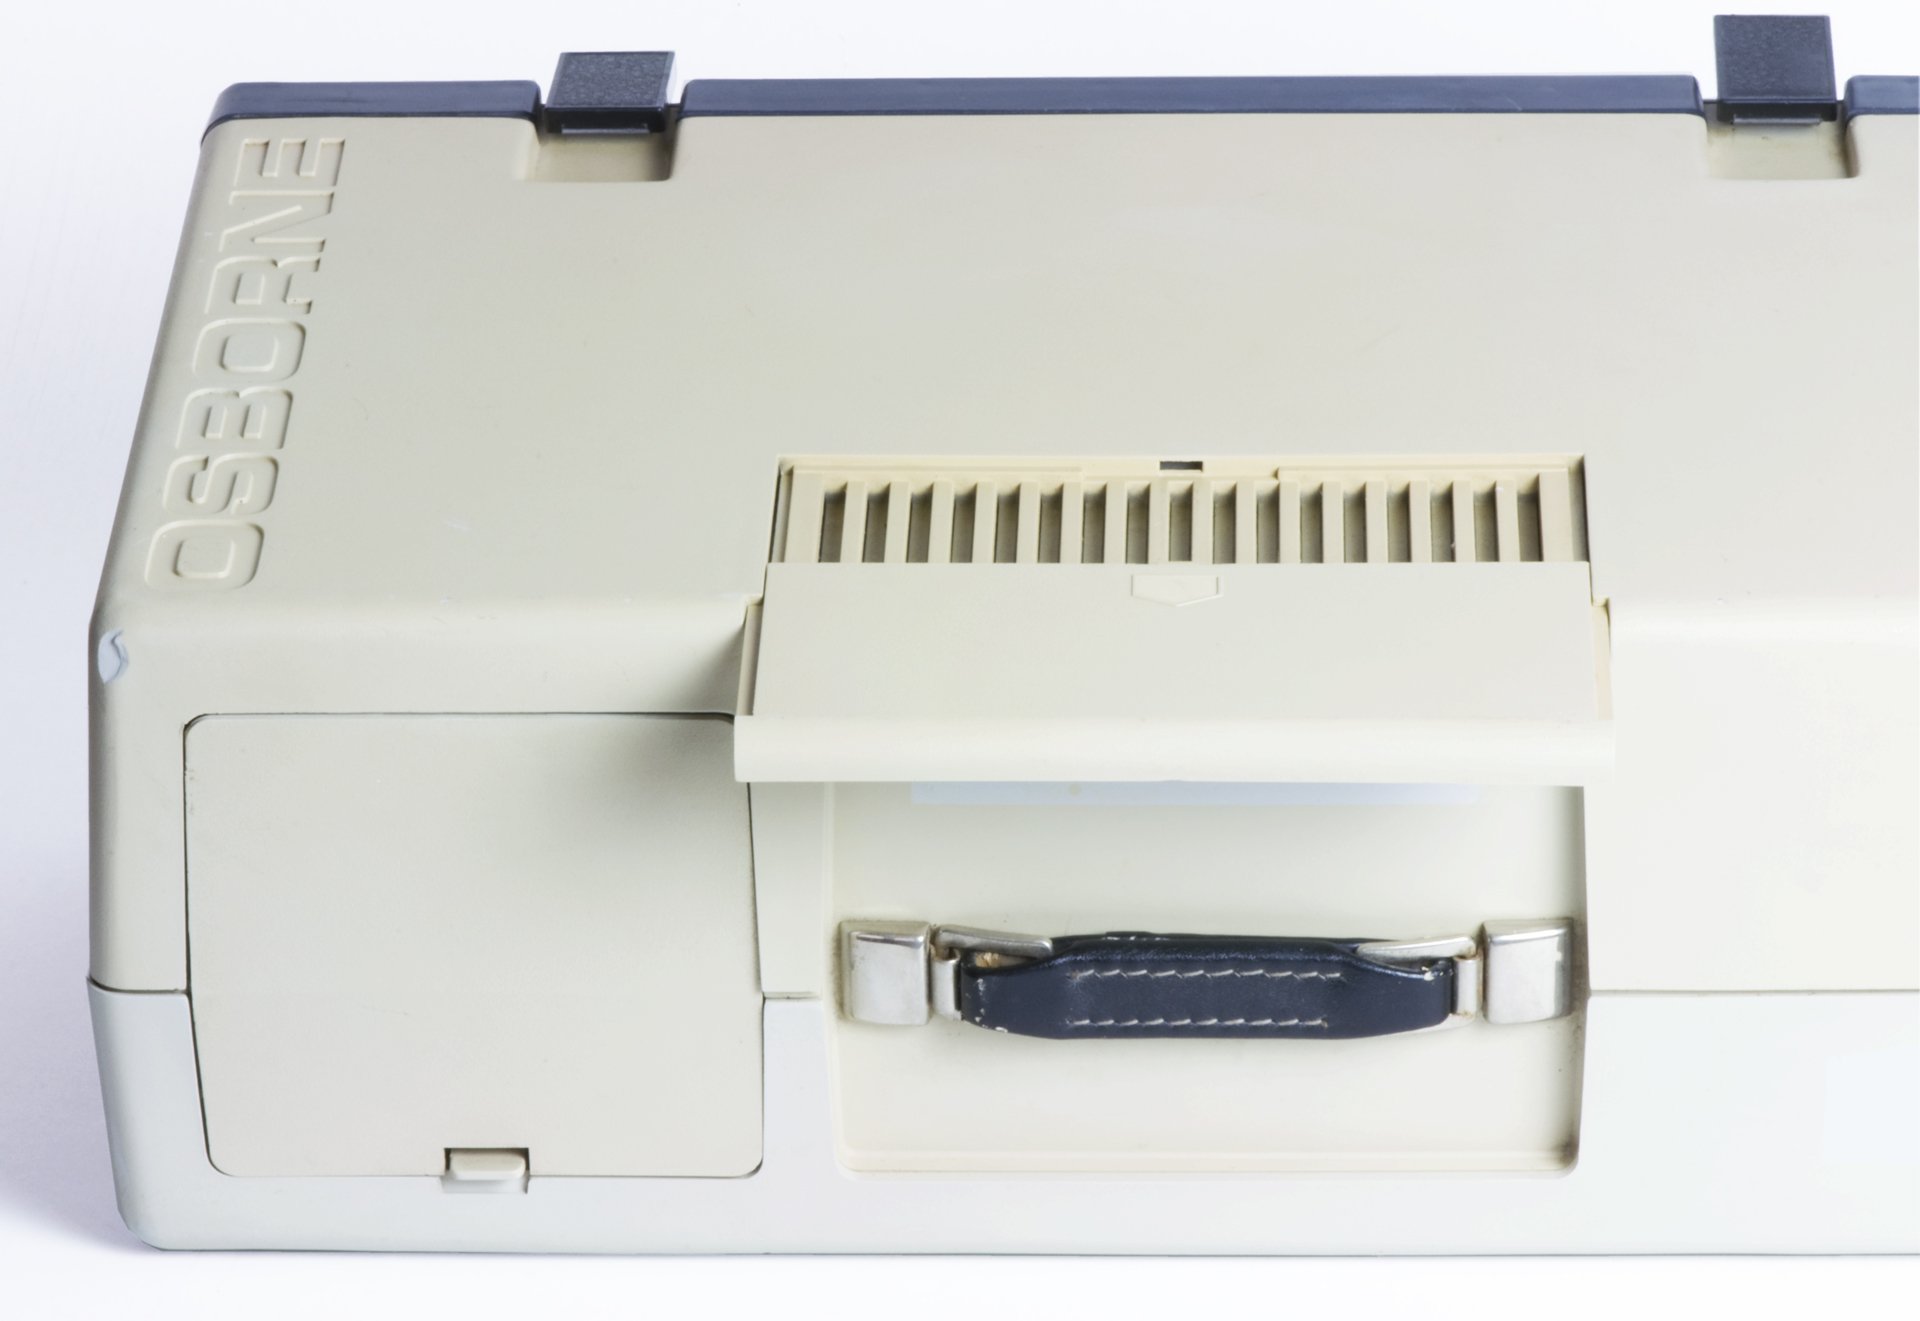 Bottom first. Osborne 1 (1981 год). Osborne 1 габариты. Osbourne 1981 первый портативный компьютер. Osborne 1 разъемы.